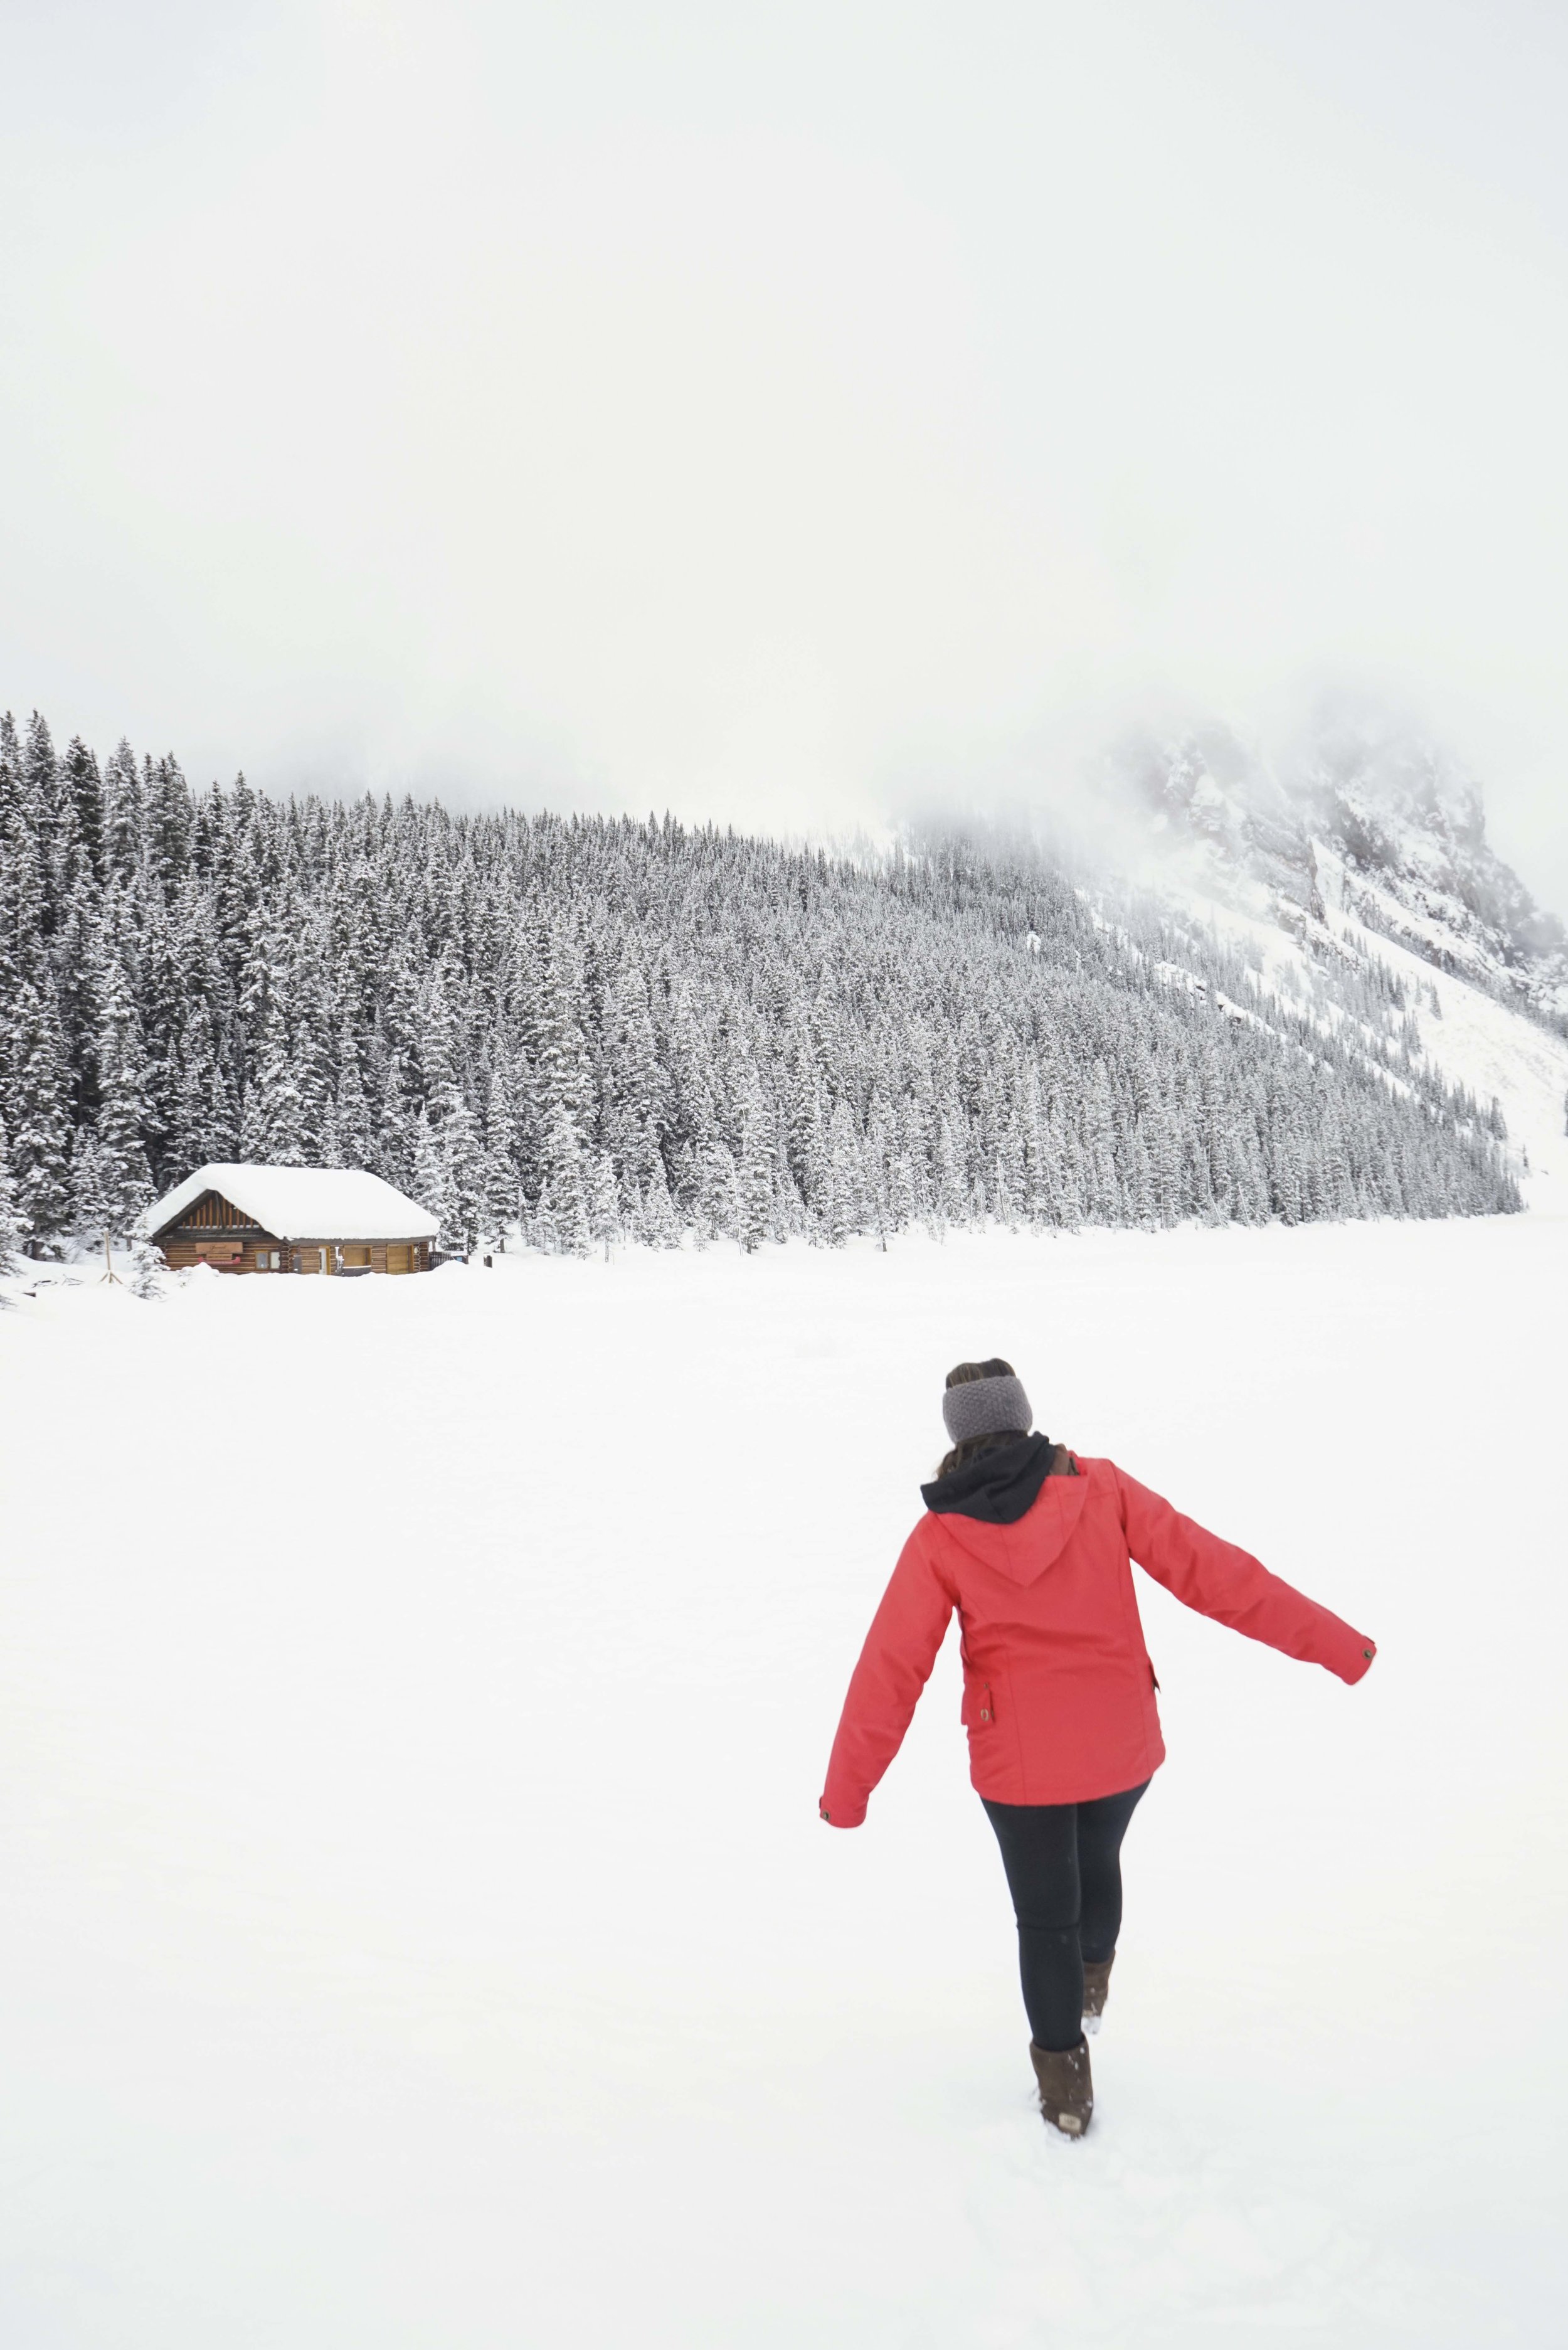 Banff Winter Go Guide | Banff, Alberta, Canada | What to see in Banff | What to do in Banff | What to eat in Banff